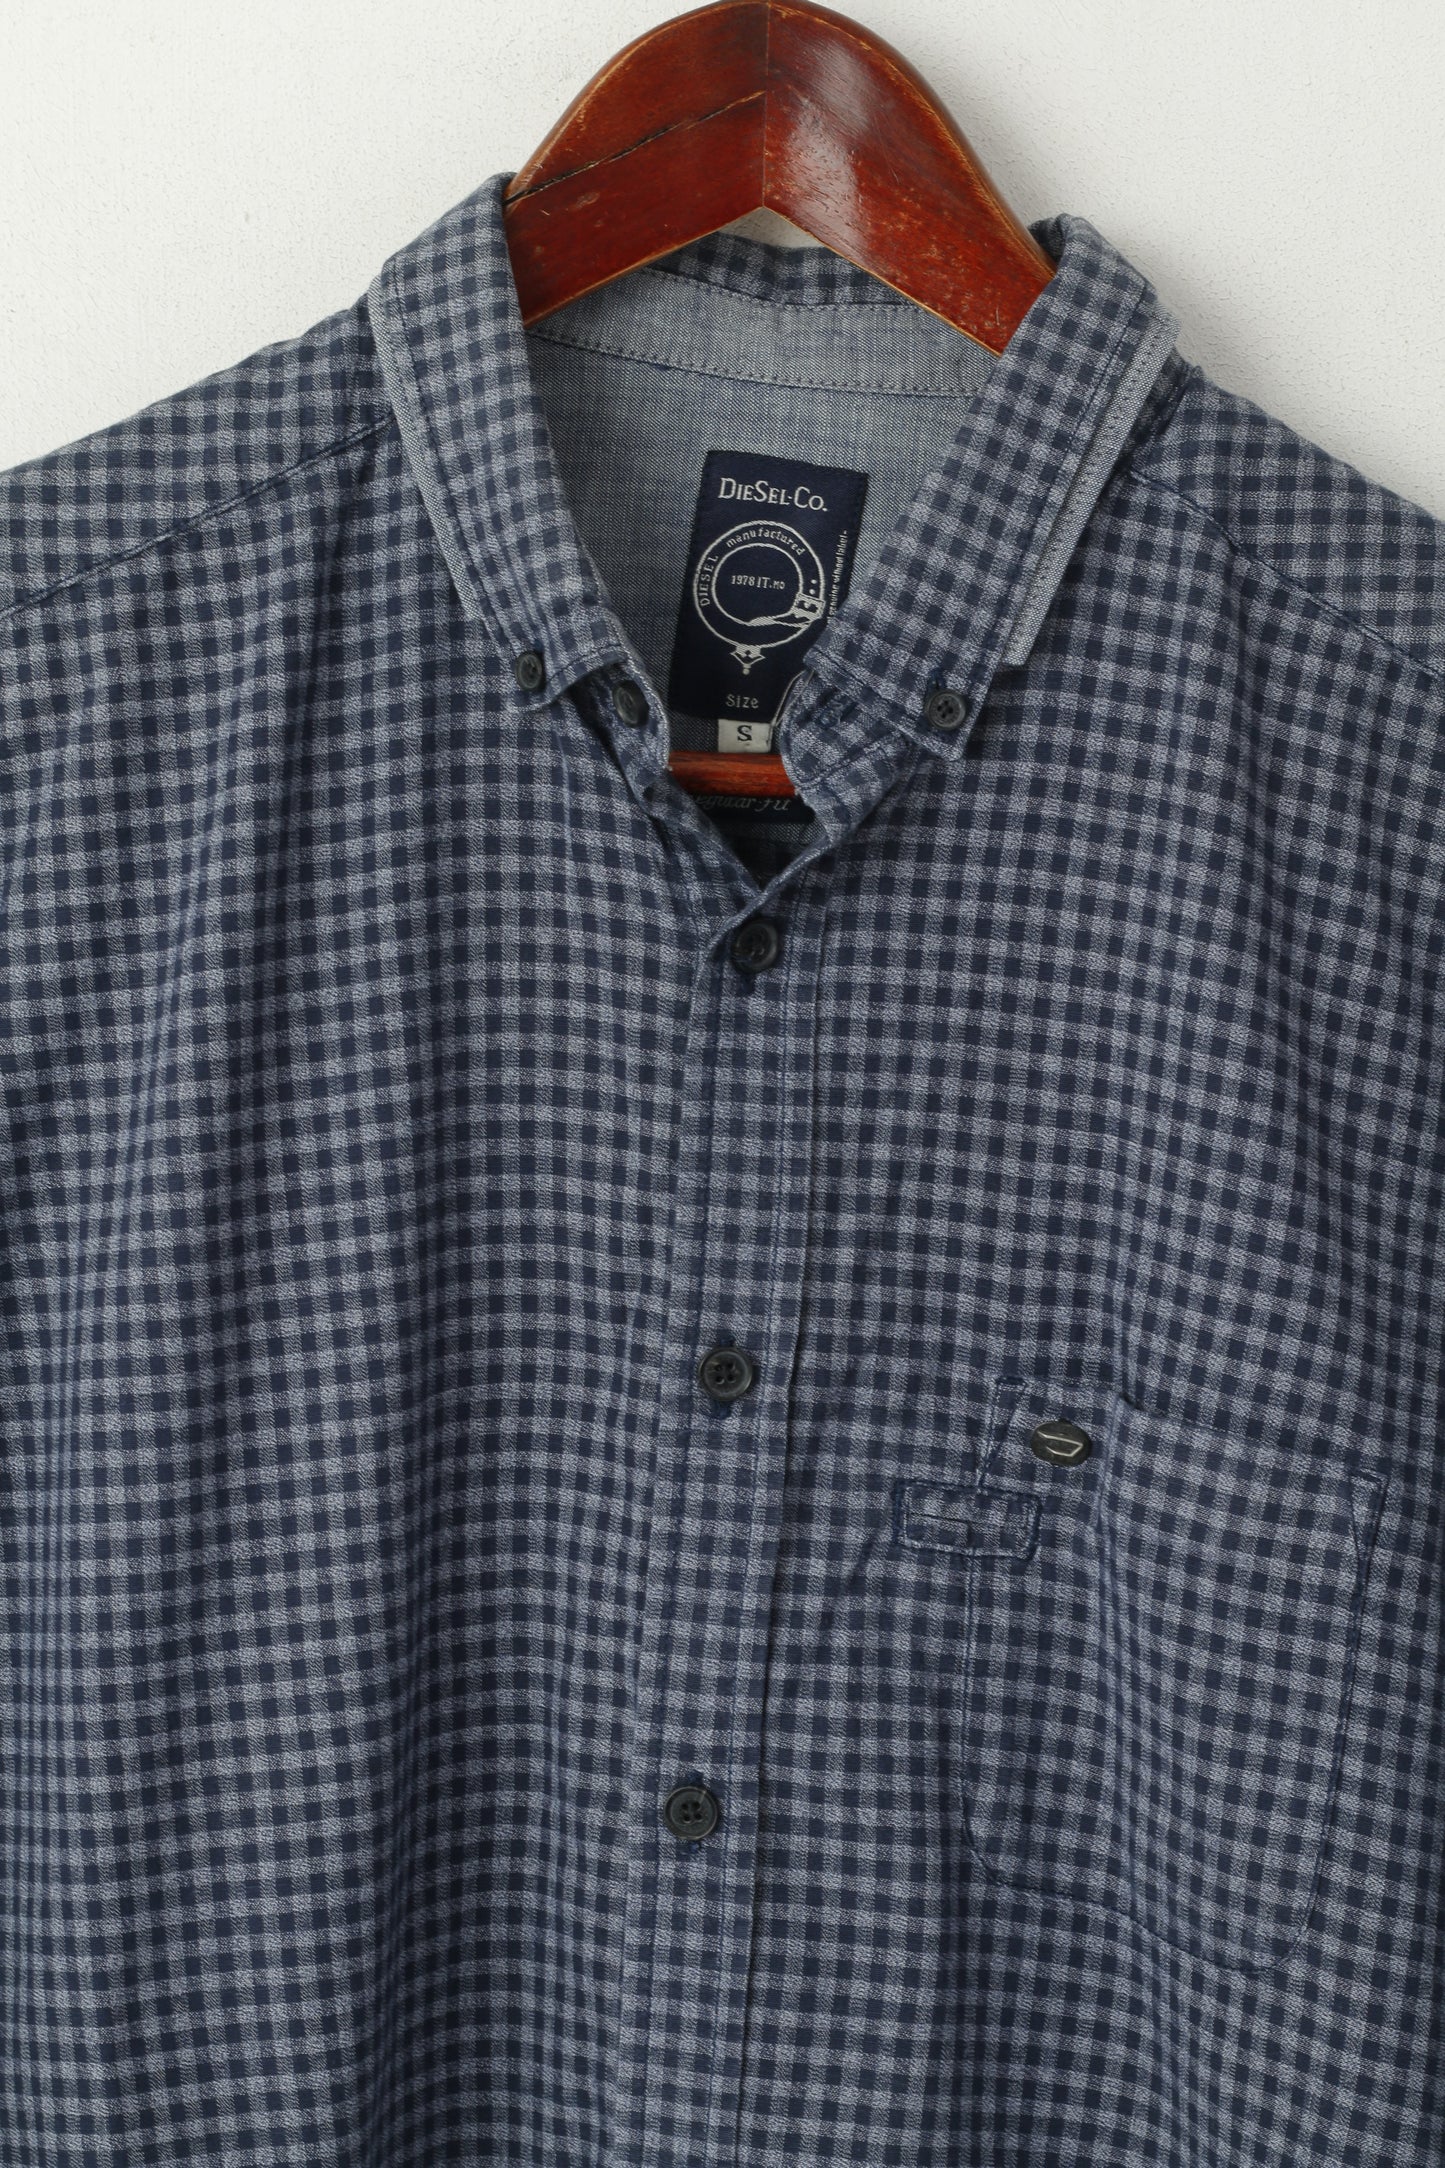 Diesel Co. Men S Casual Shirt Navy Check Cotton Button Down Collar Long Sleeve Top